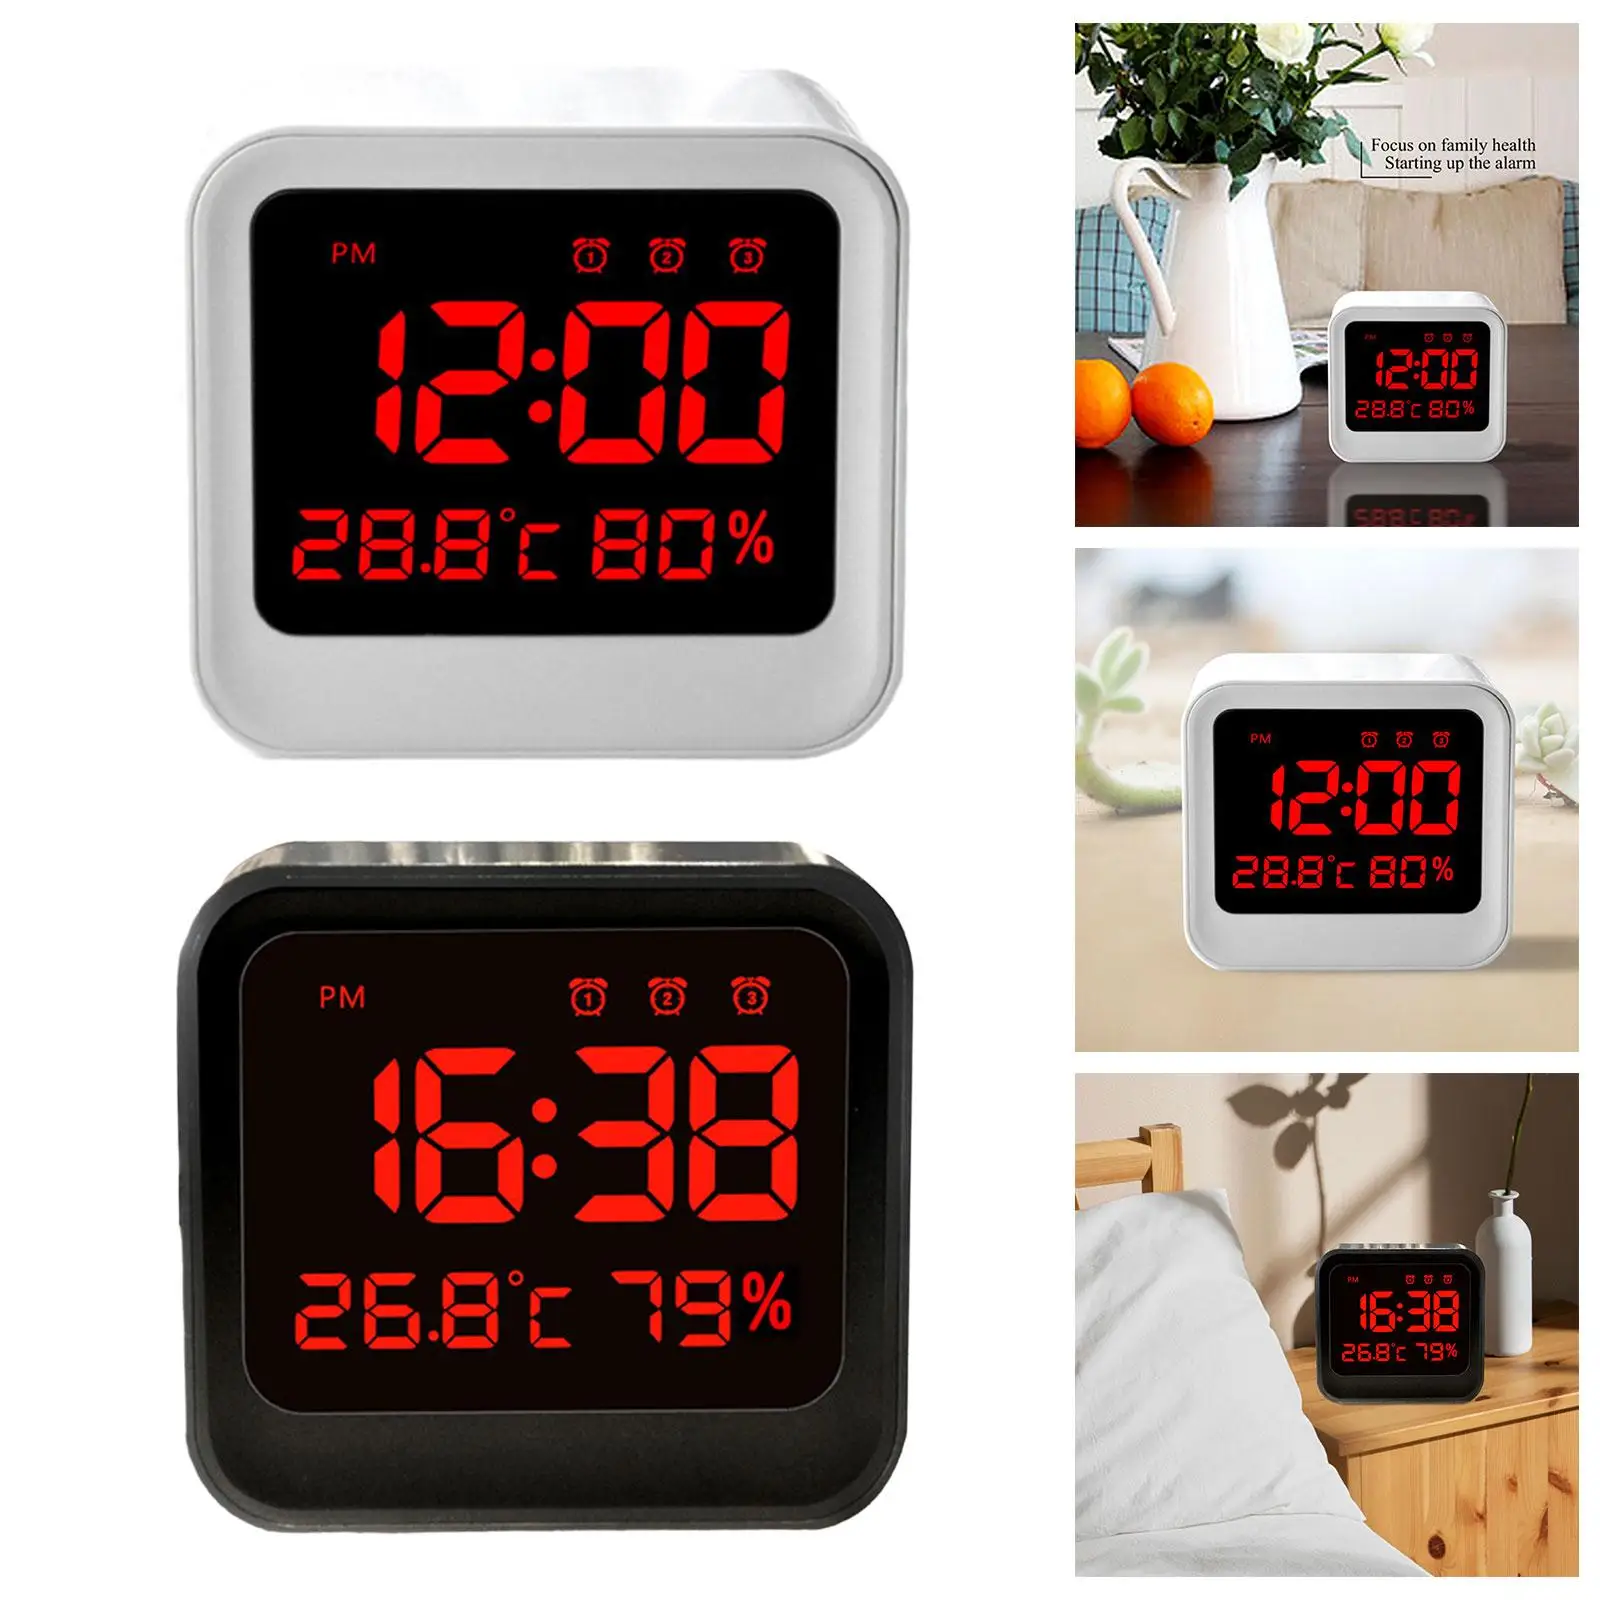 Digital Alarm Clock Temperature Display Large LED Display Bedside Clock for Bedroom Heavy Sleeper Kids Adult Office Bedside